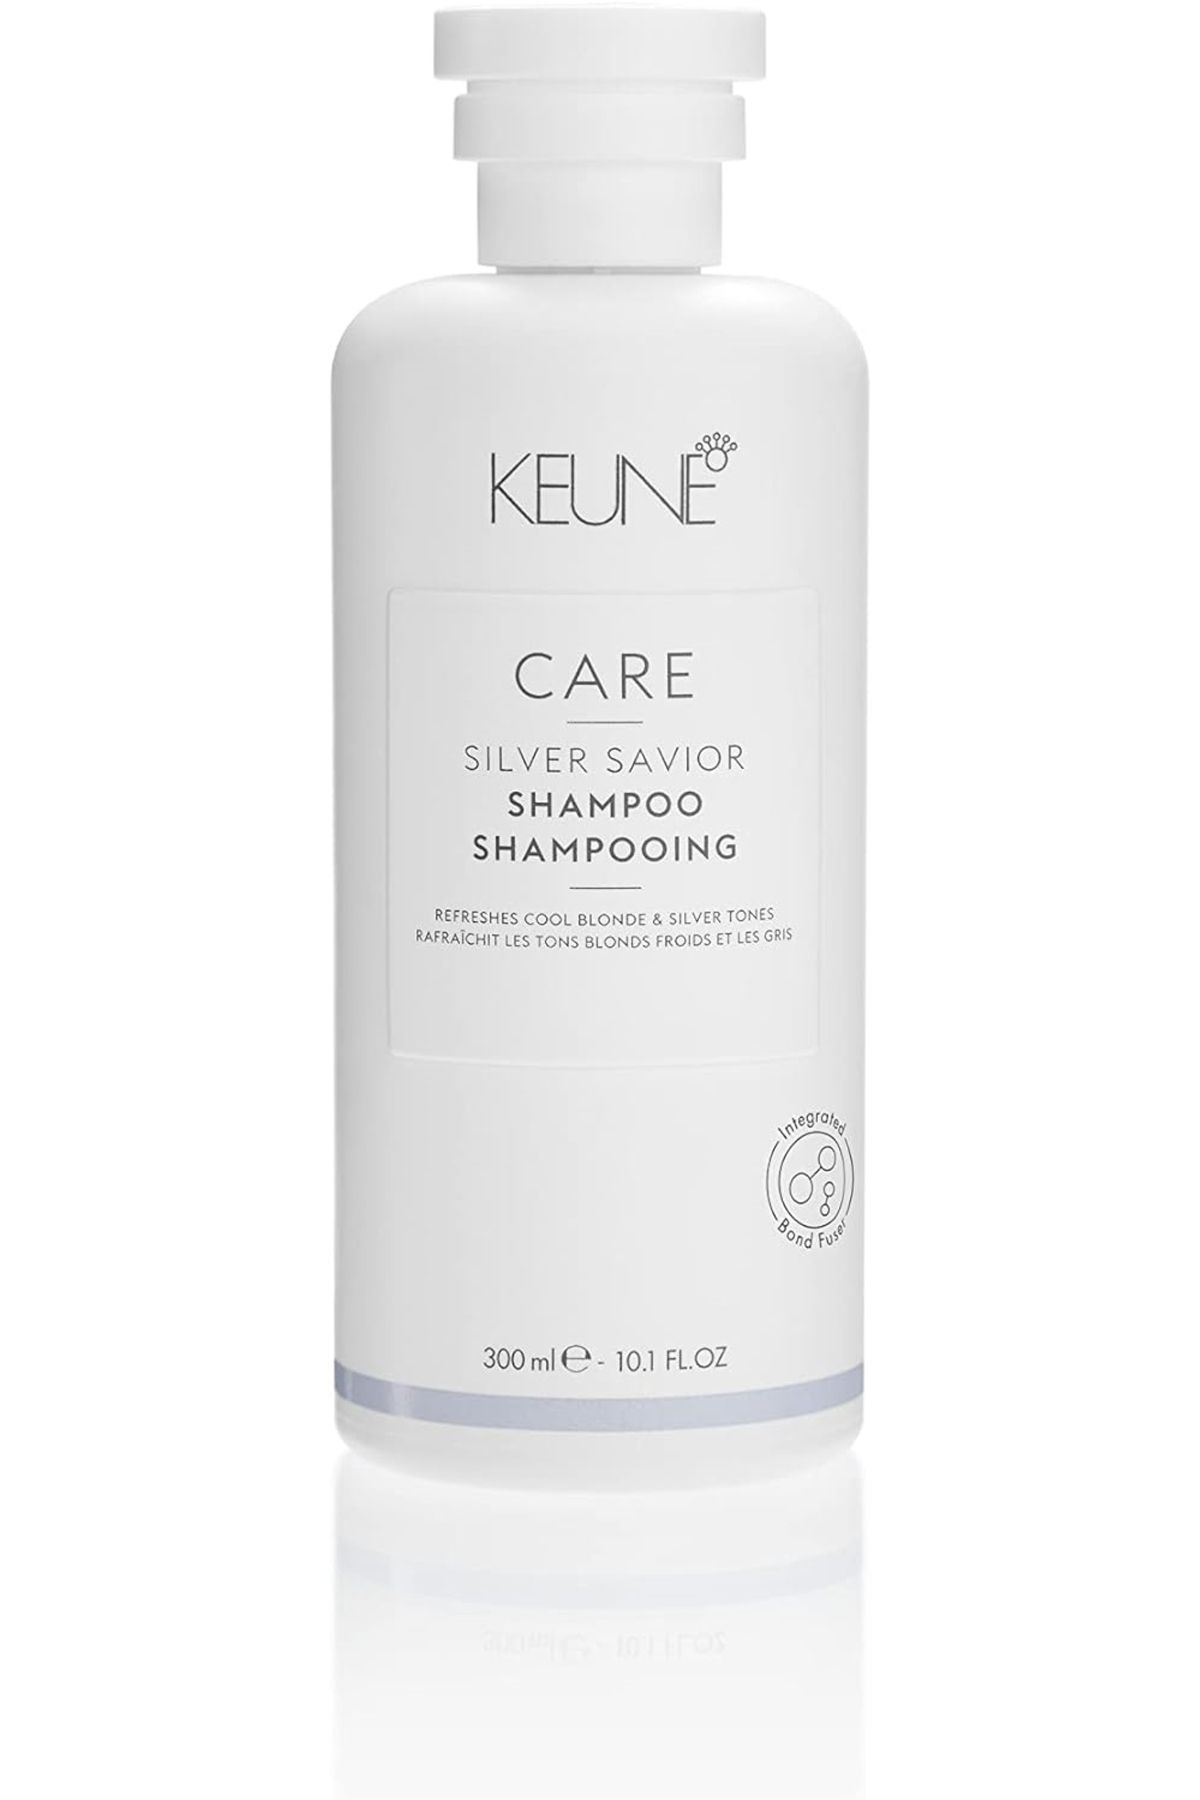 Keune Care Silver Savior Shampoo Turunculaşma Karşıtı Mor Şampuan 300 ml-mnbvghehvgbnjmklşlpoıuy